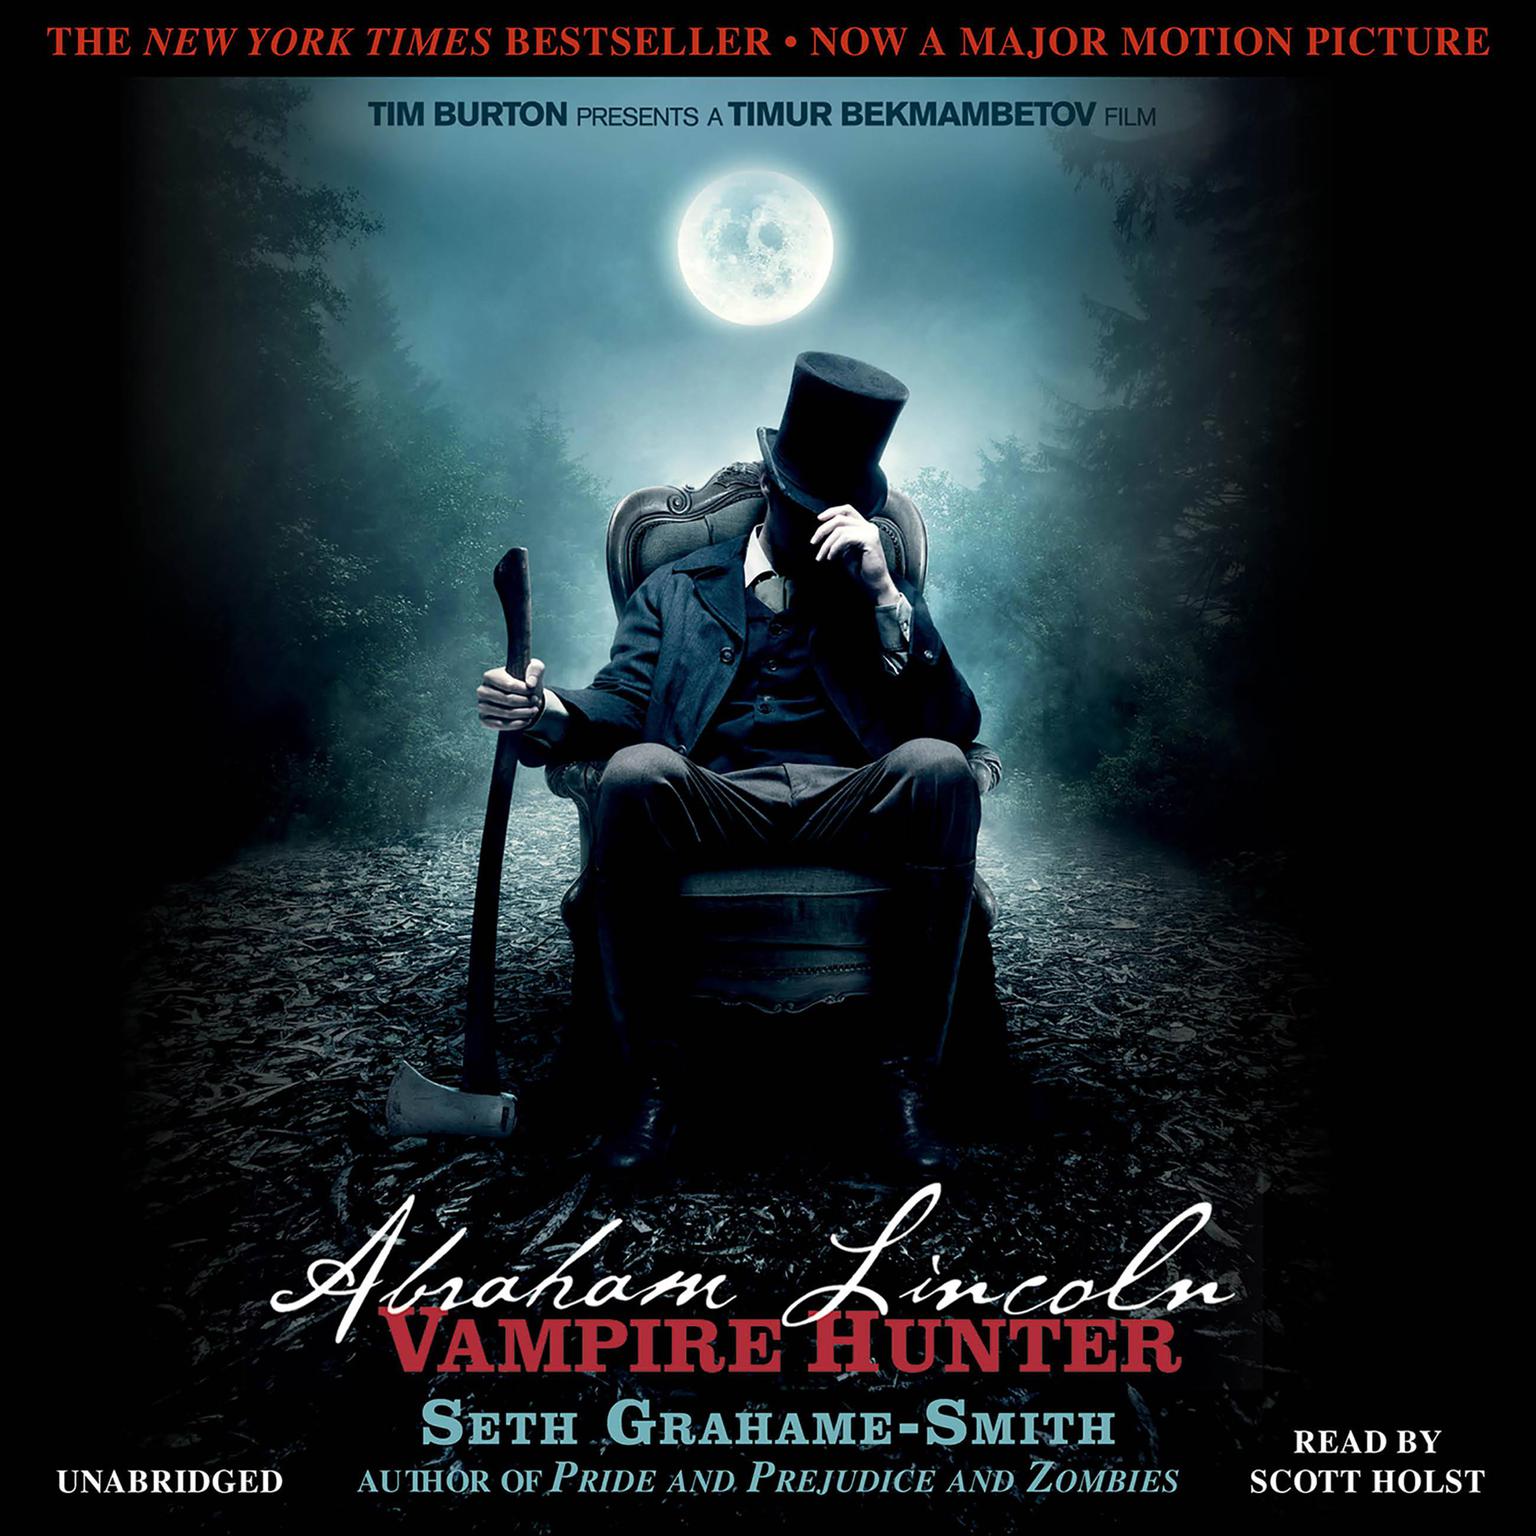 Abraham Lincoln: Vampire Hunter: Vampire Hunter Audiobook, by Seth Grahame-Smith